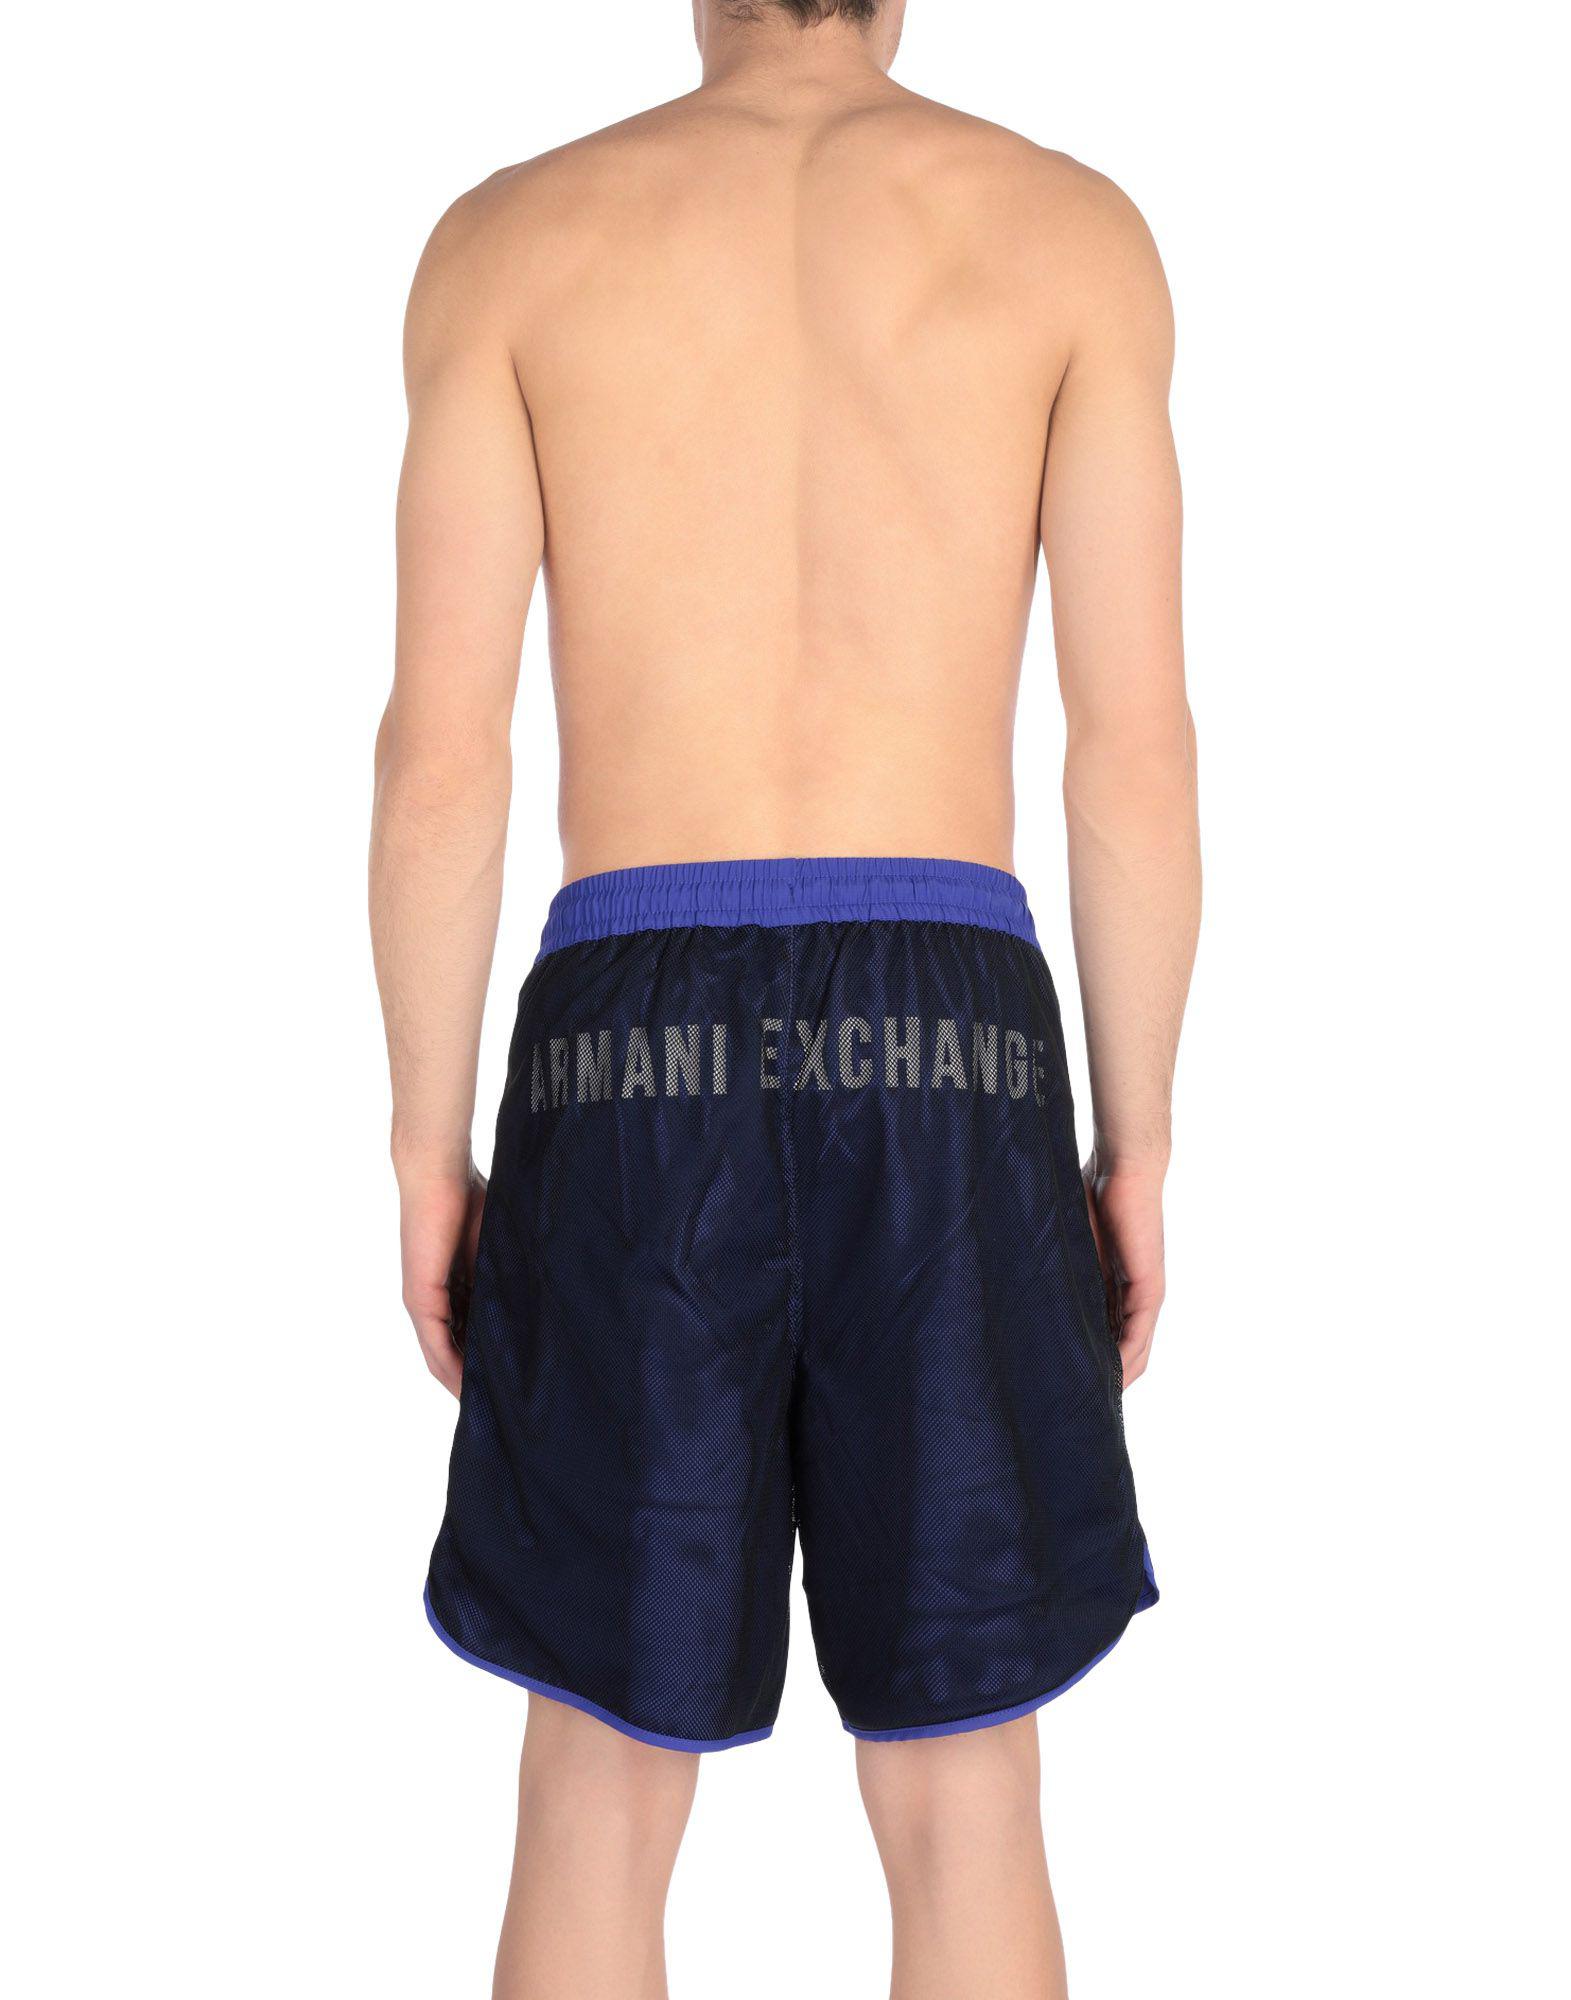 armani exchange swimming trunks